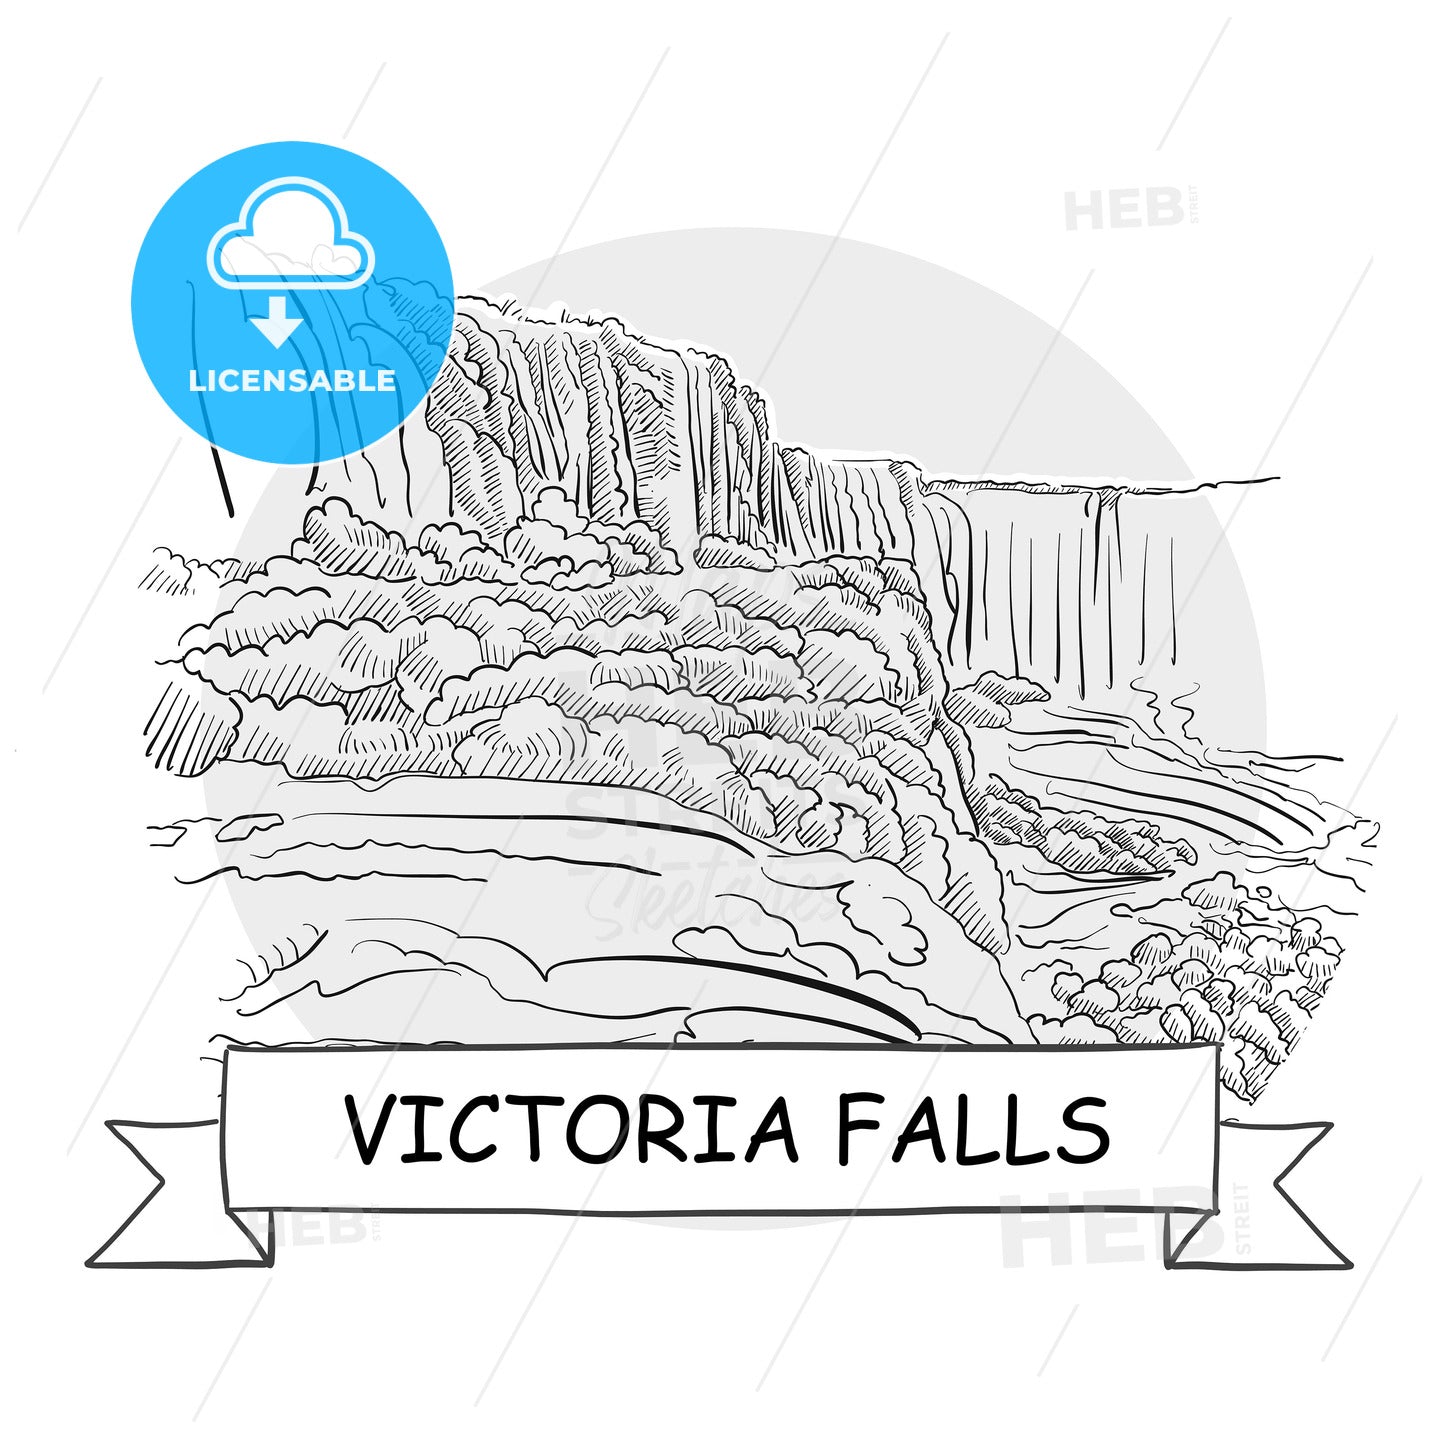 Victoria Falls hand-drawn urban vector sign – instant download